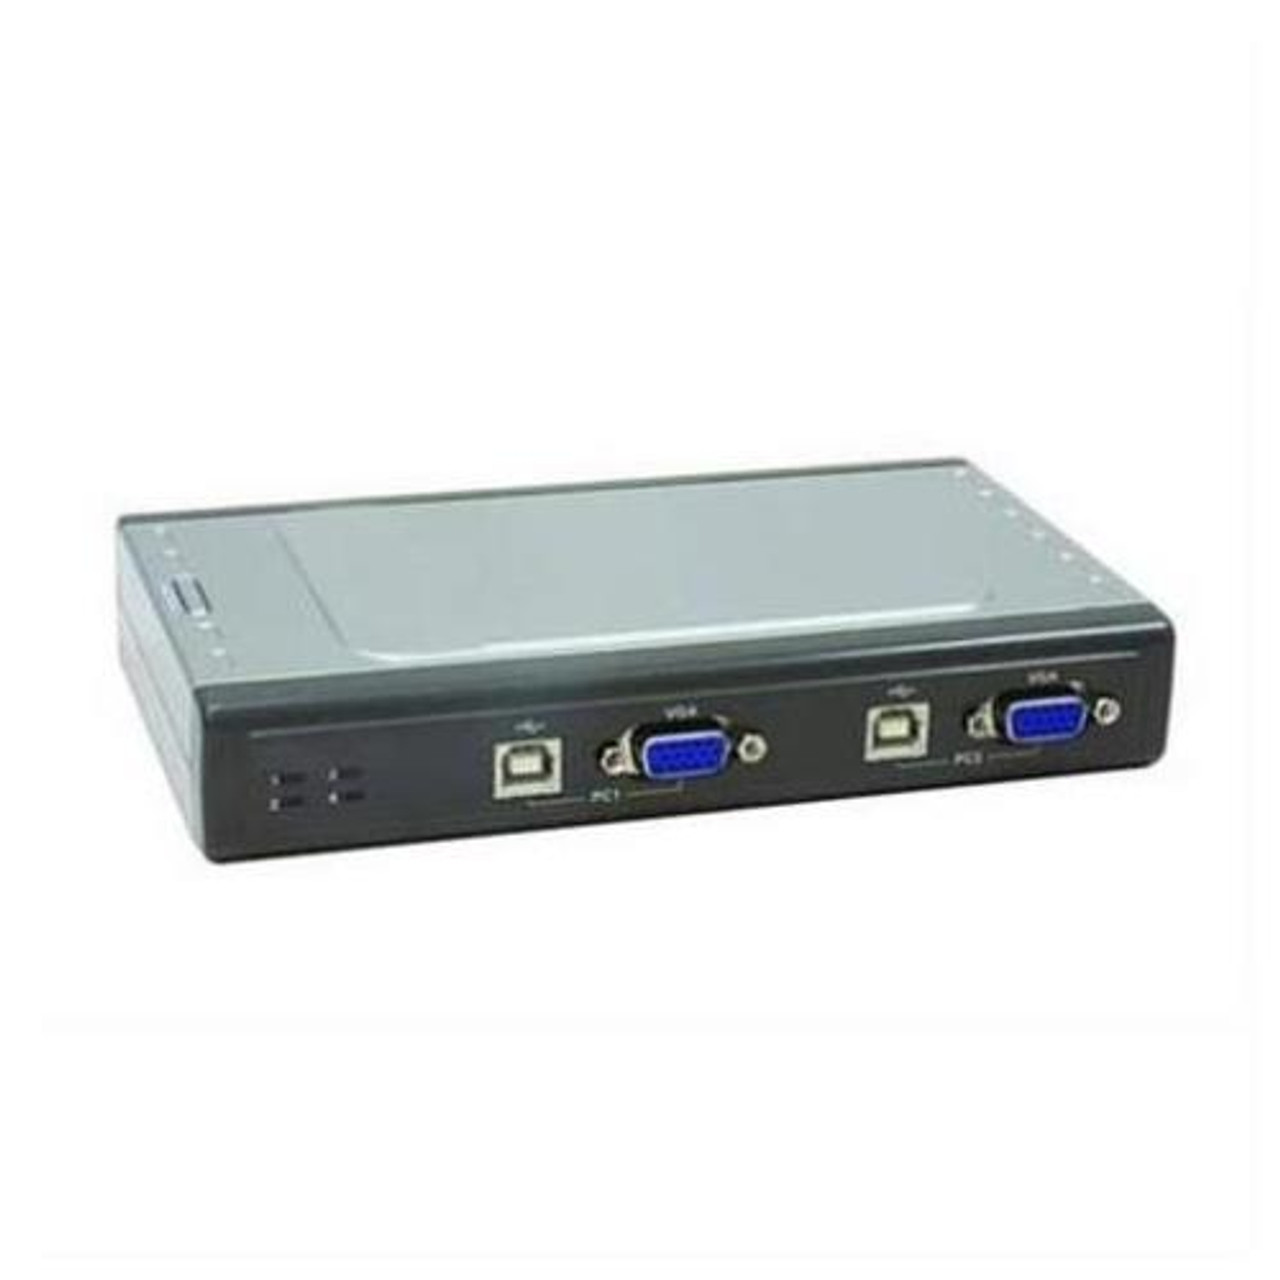 Used Avocent SwitchView MM2 Model # 2SVPUA20 2-Port External KVM Switch 